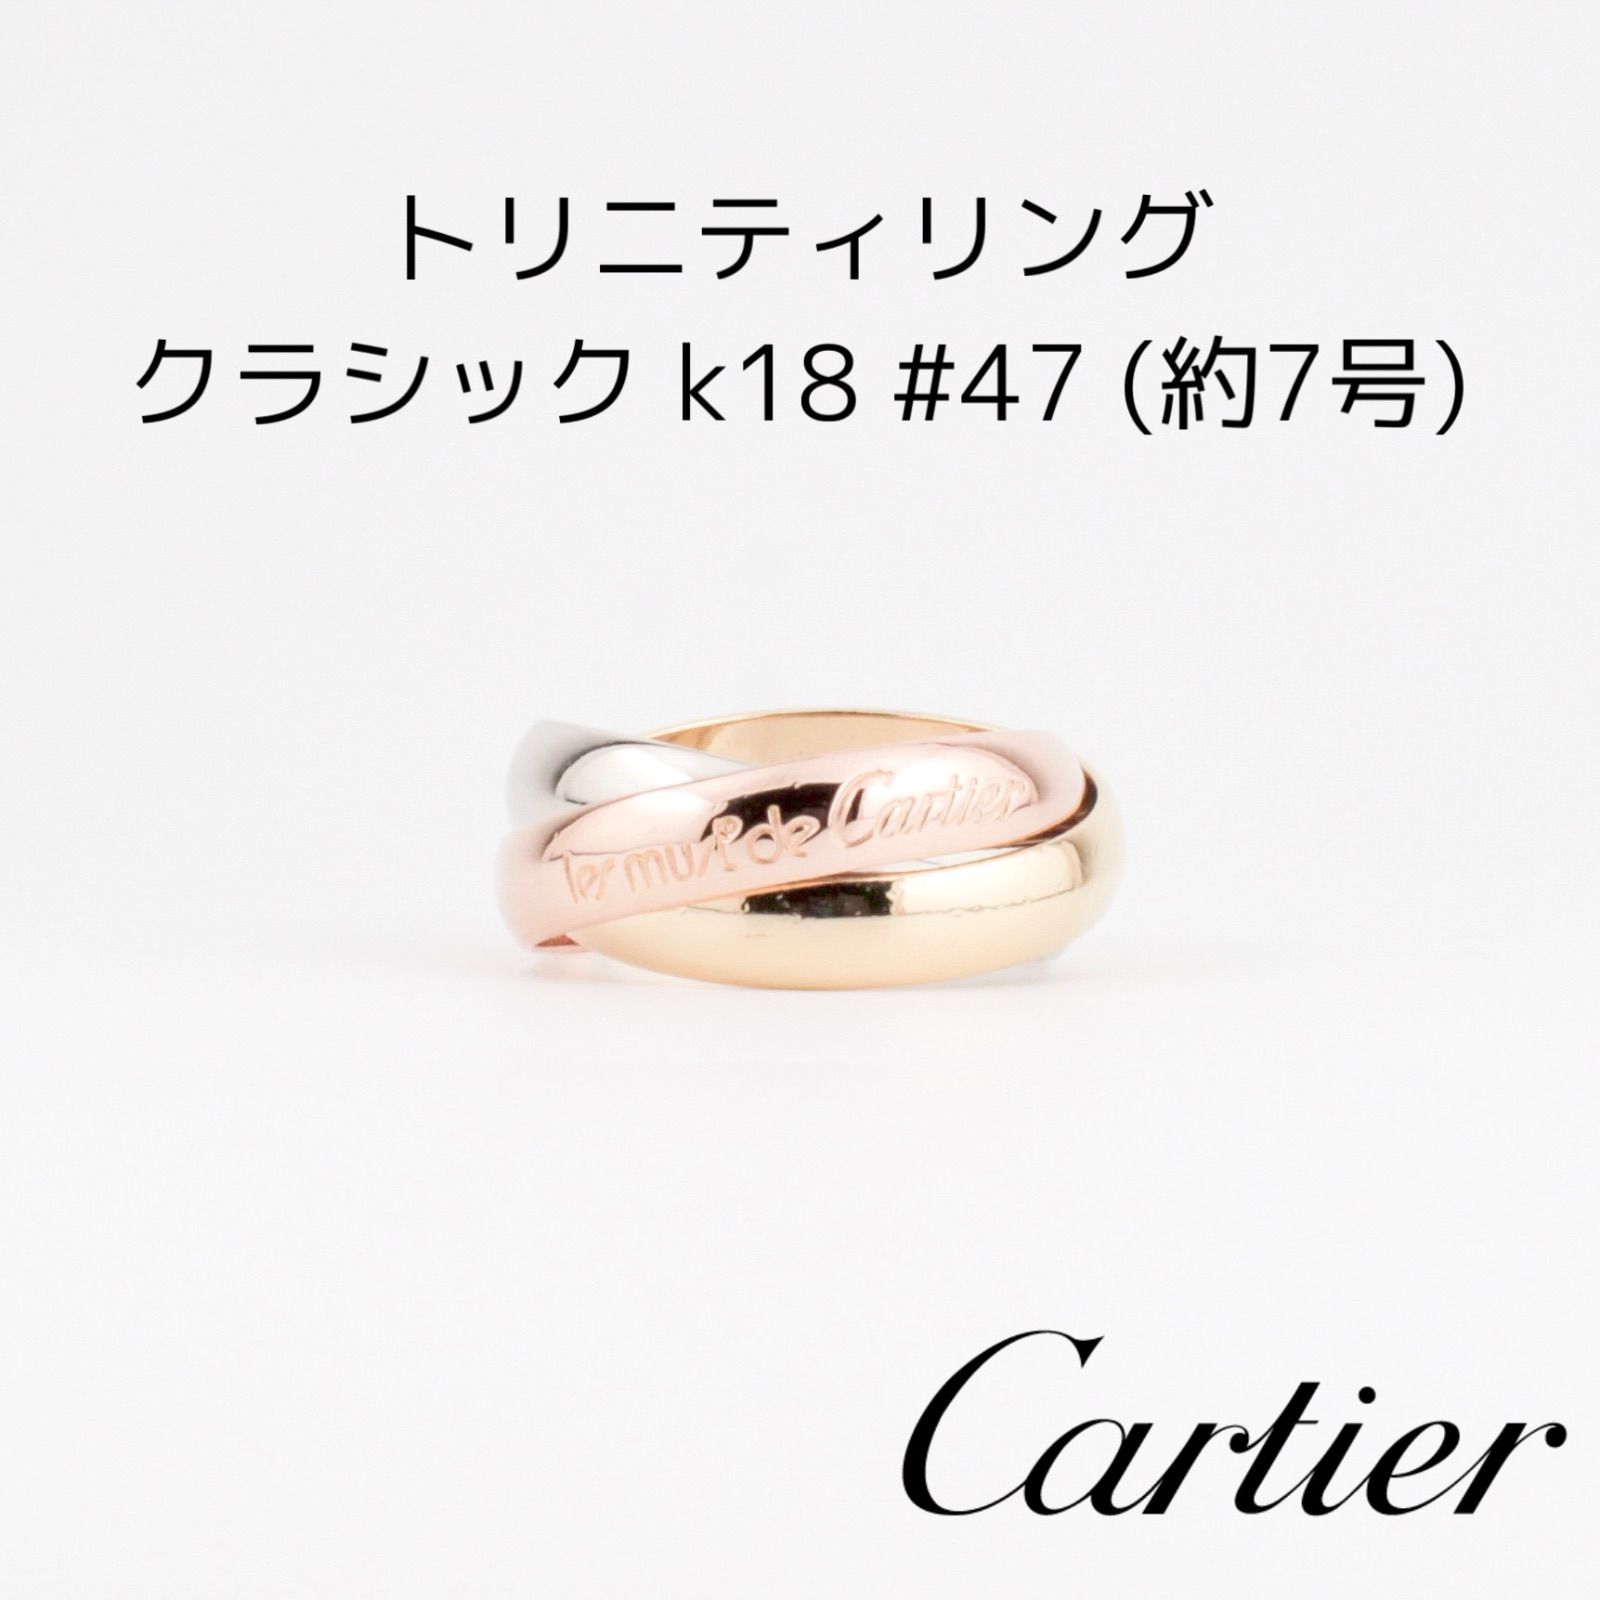 Cartier カルティエ トリニティリング クラシック k18 7号 ...